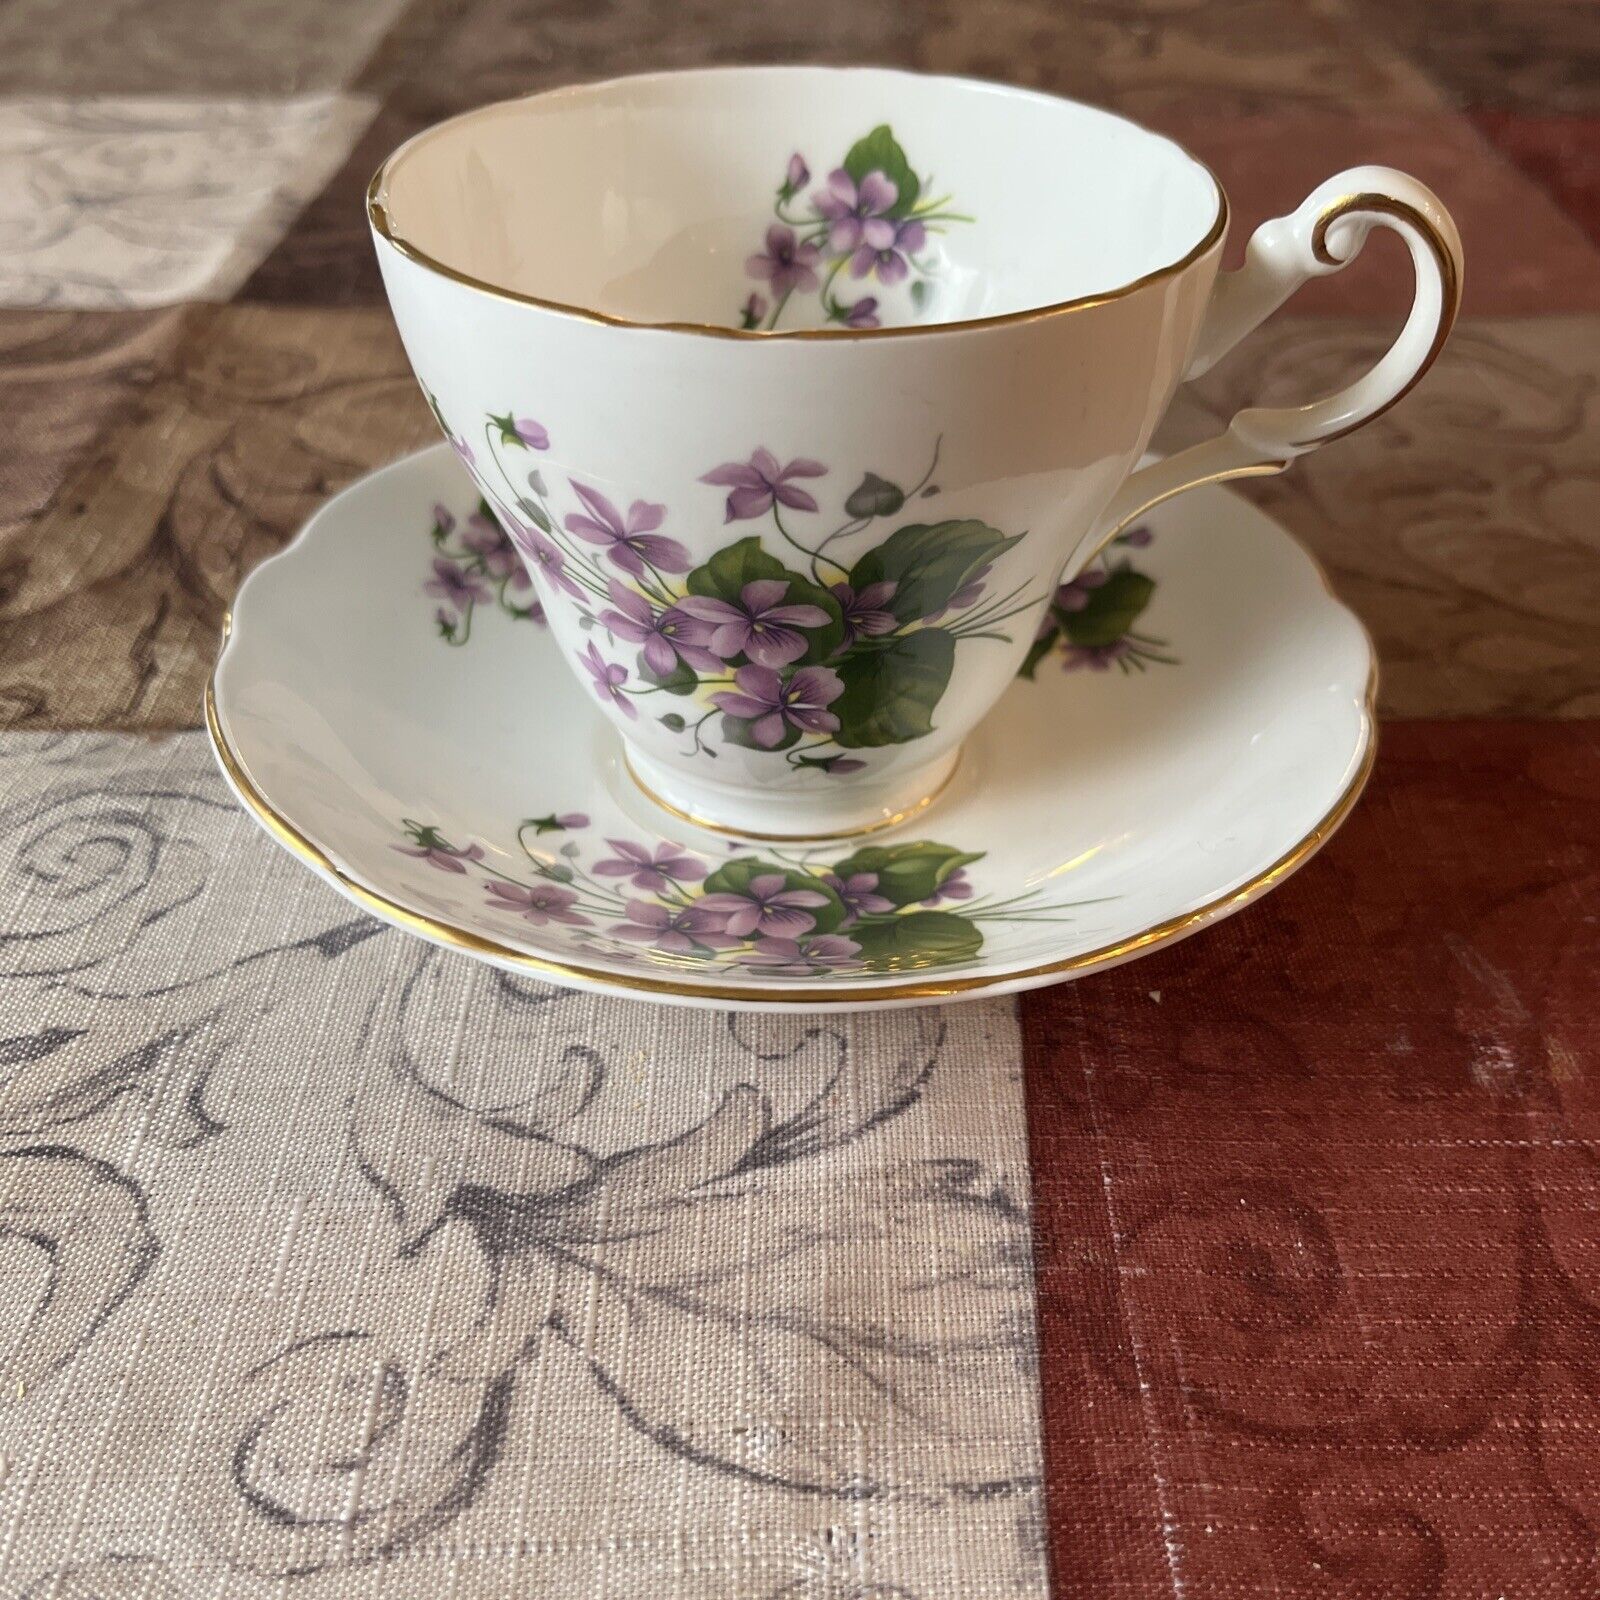 Vintage Regency English Bone China Floral Tea Cup And Saucer Set